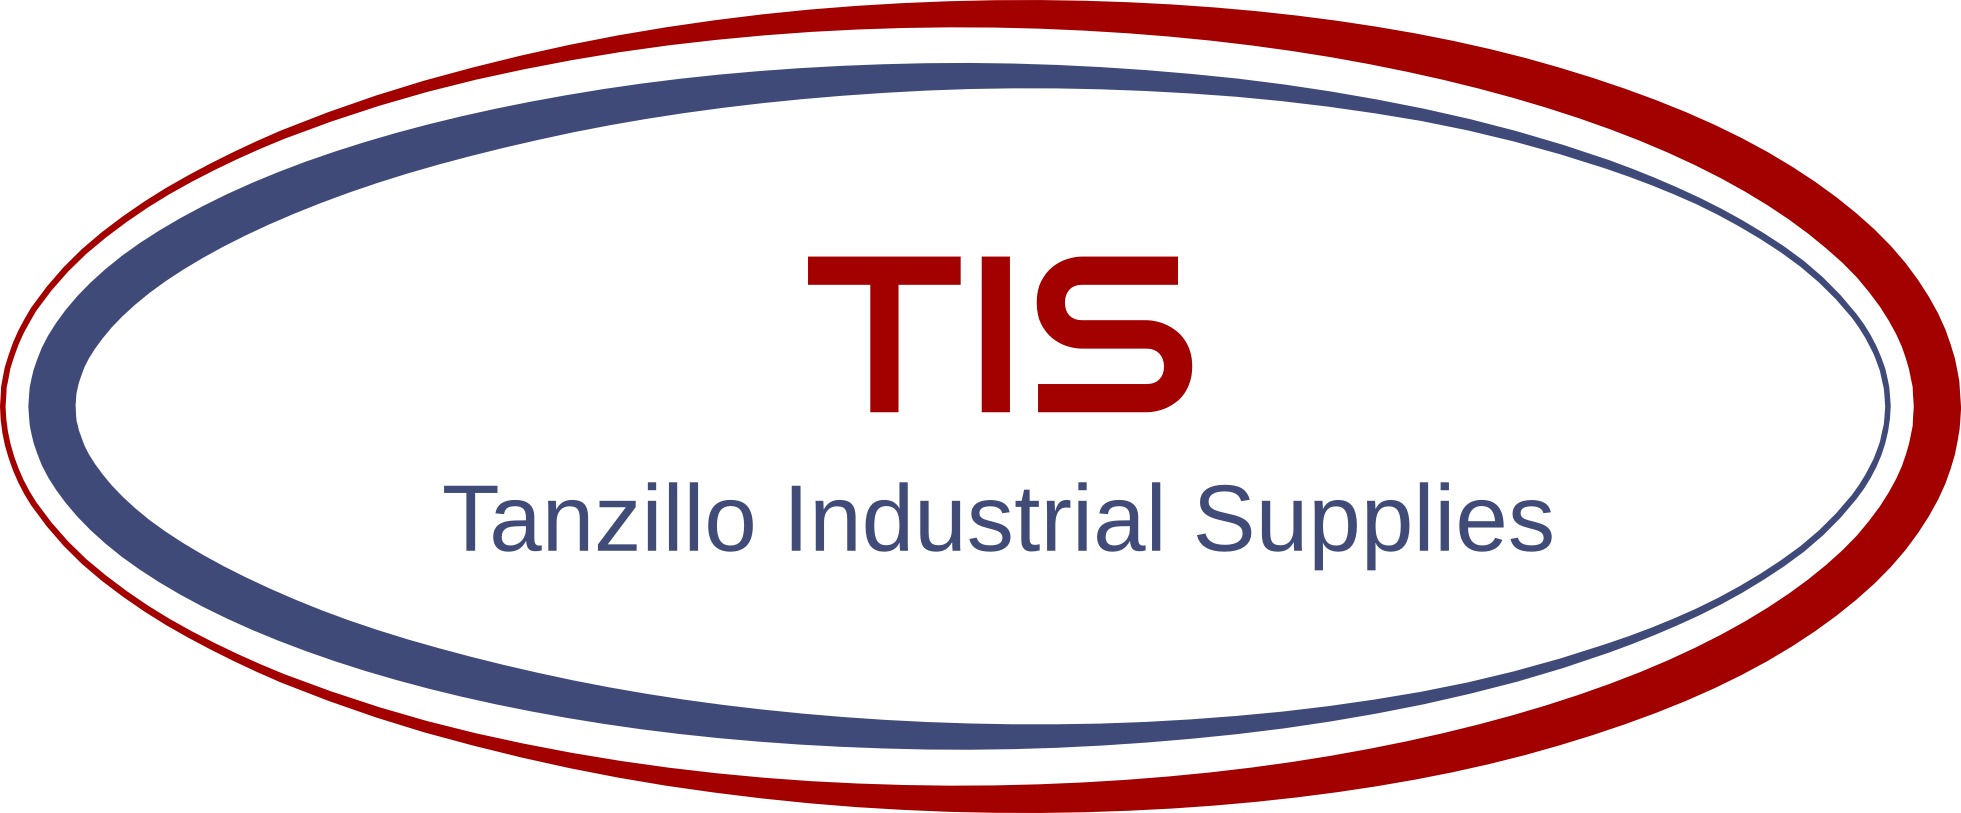 TANZILLO Industrial Supplies